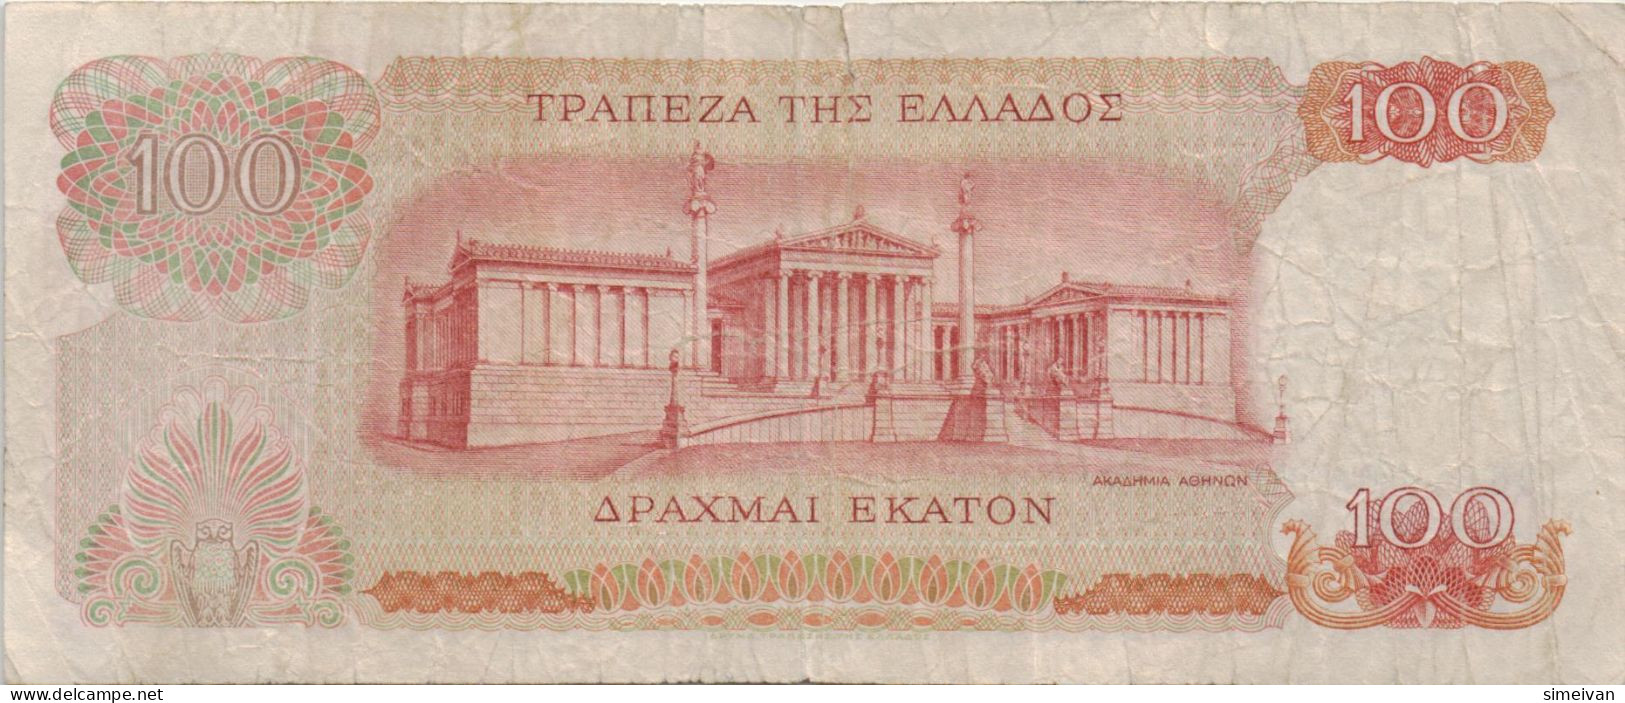 Greece 100 Drachmai 1967 P-196b Banknote Europe Currency Grèce Griechenland #5107 - Grèce